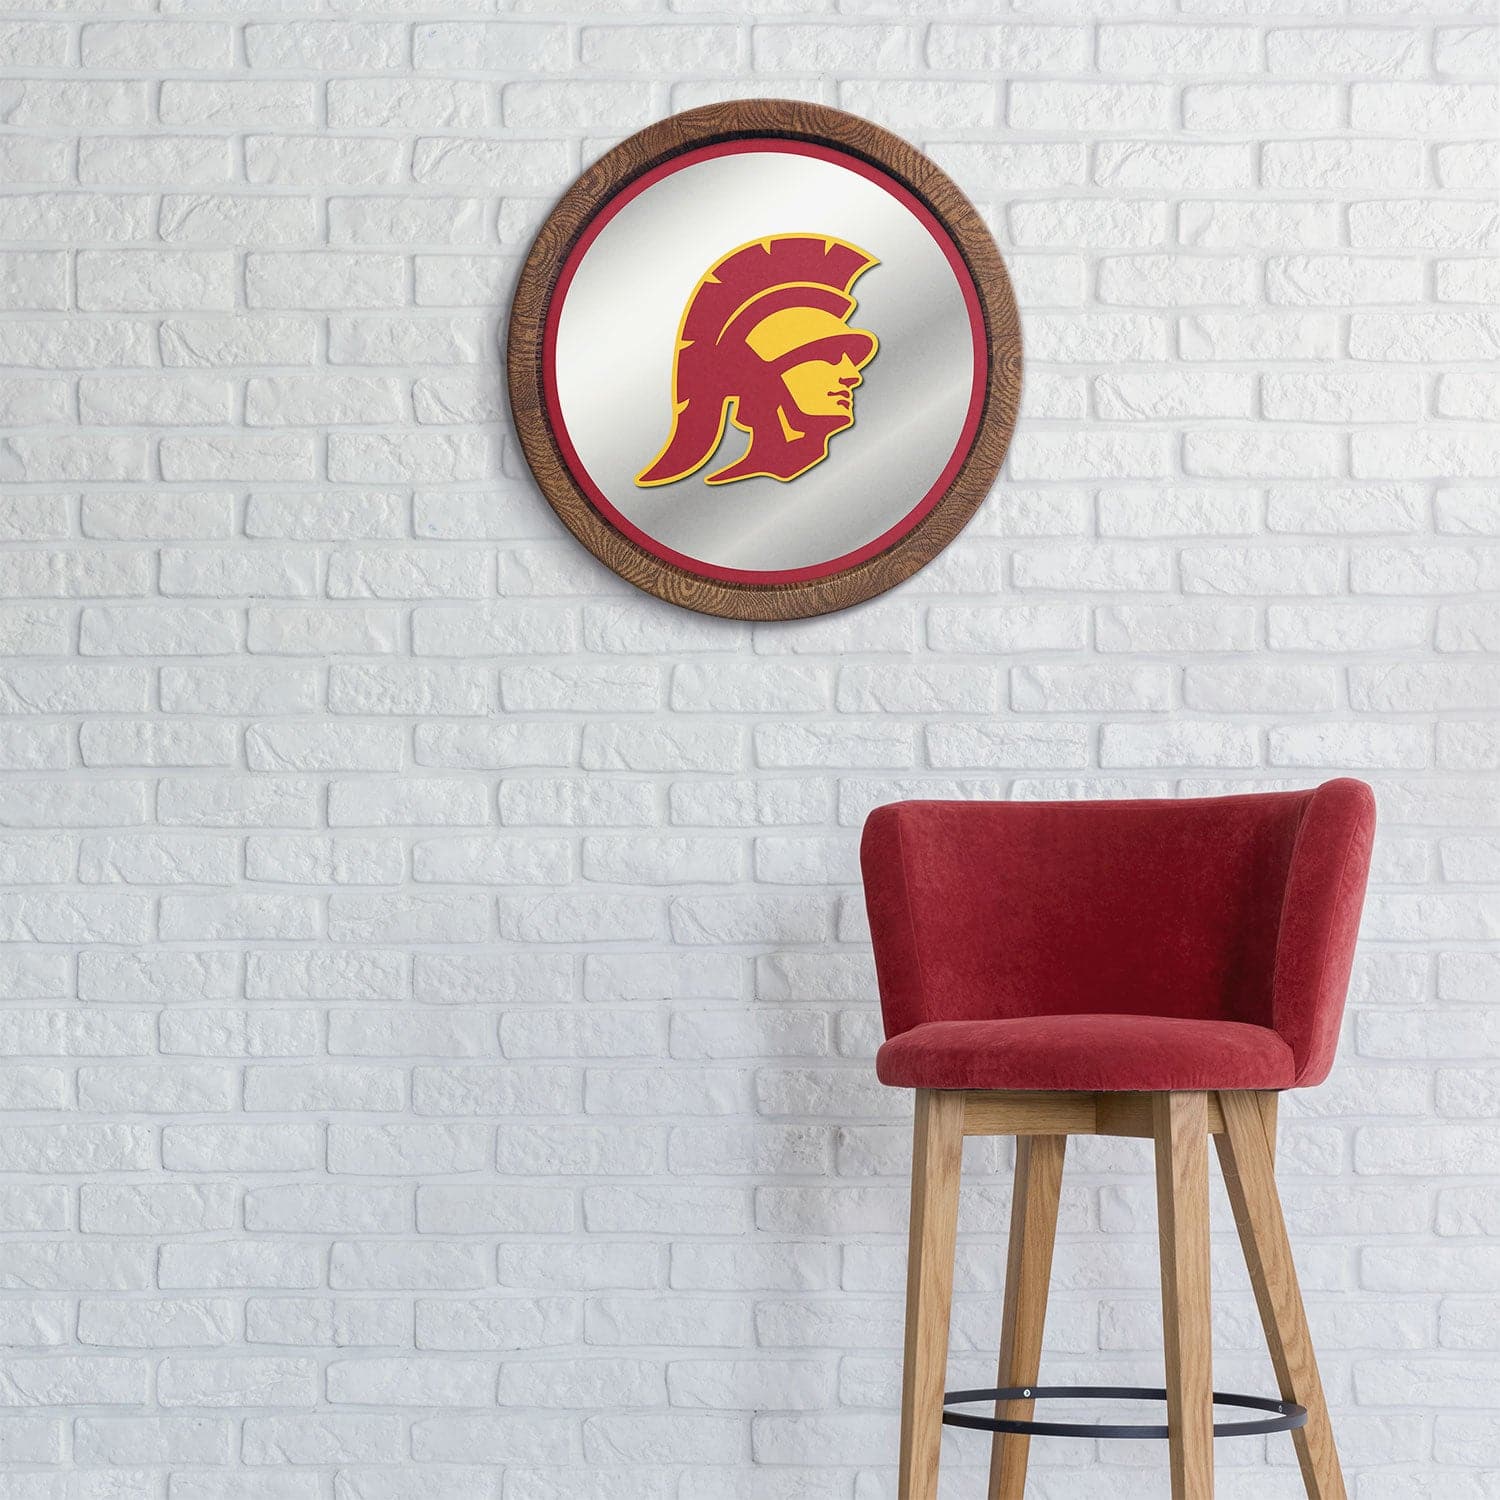 USC Trojans: Mascot - "Faux" Barrel Top Mirrored Wall Sign - The Fan-Brand